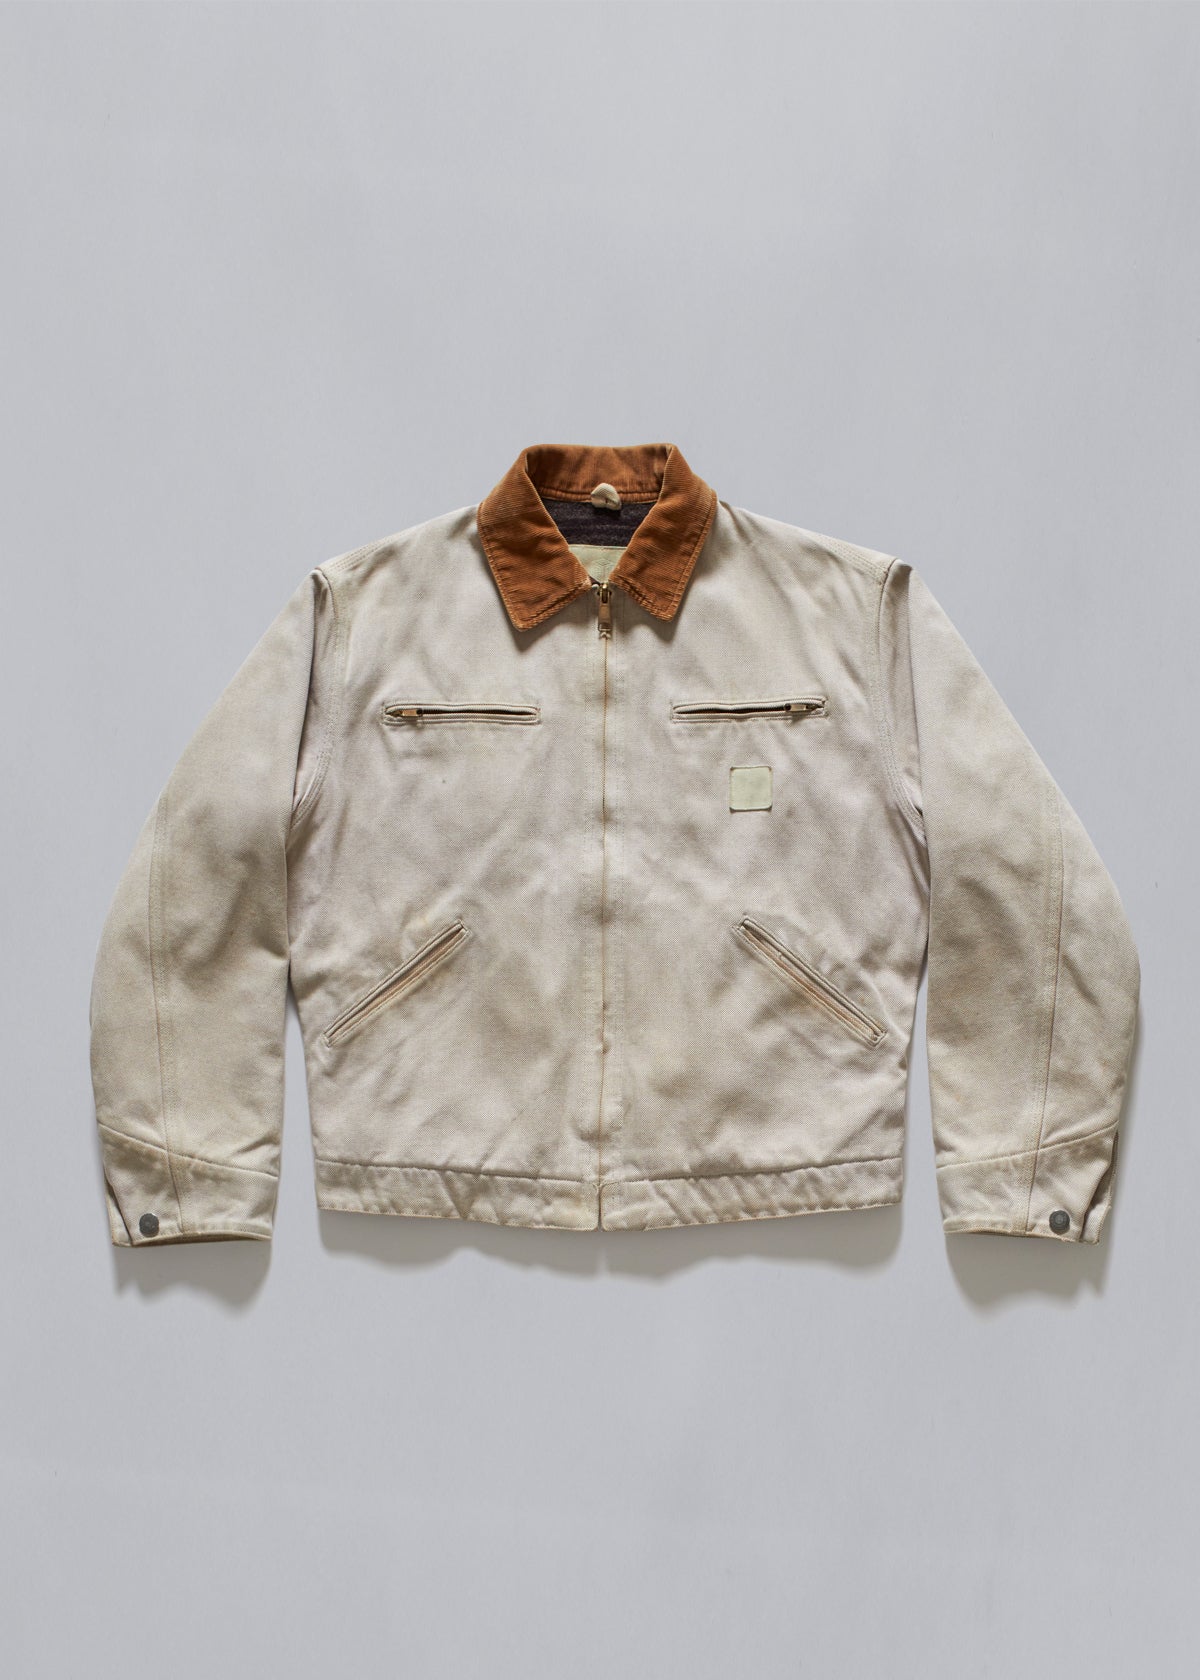 Detroit Jacket Parody Style 226 1997 - Medium - The Archivist Store